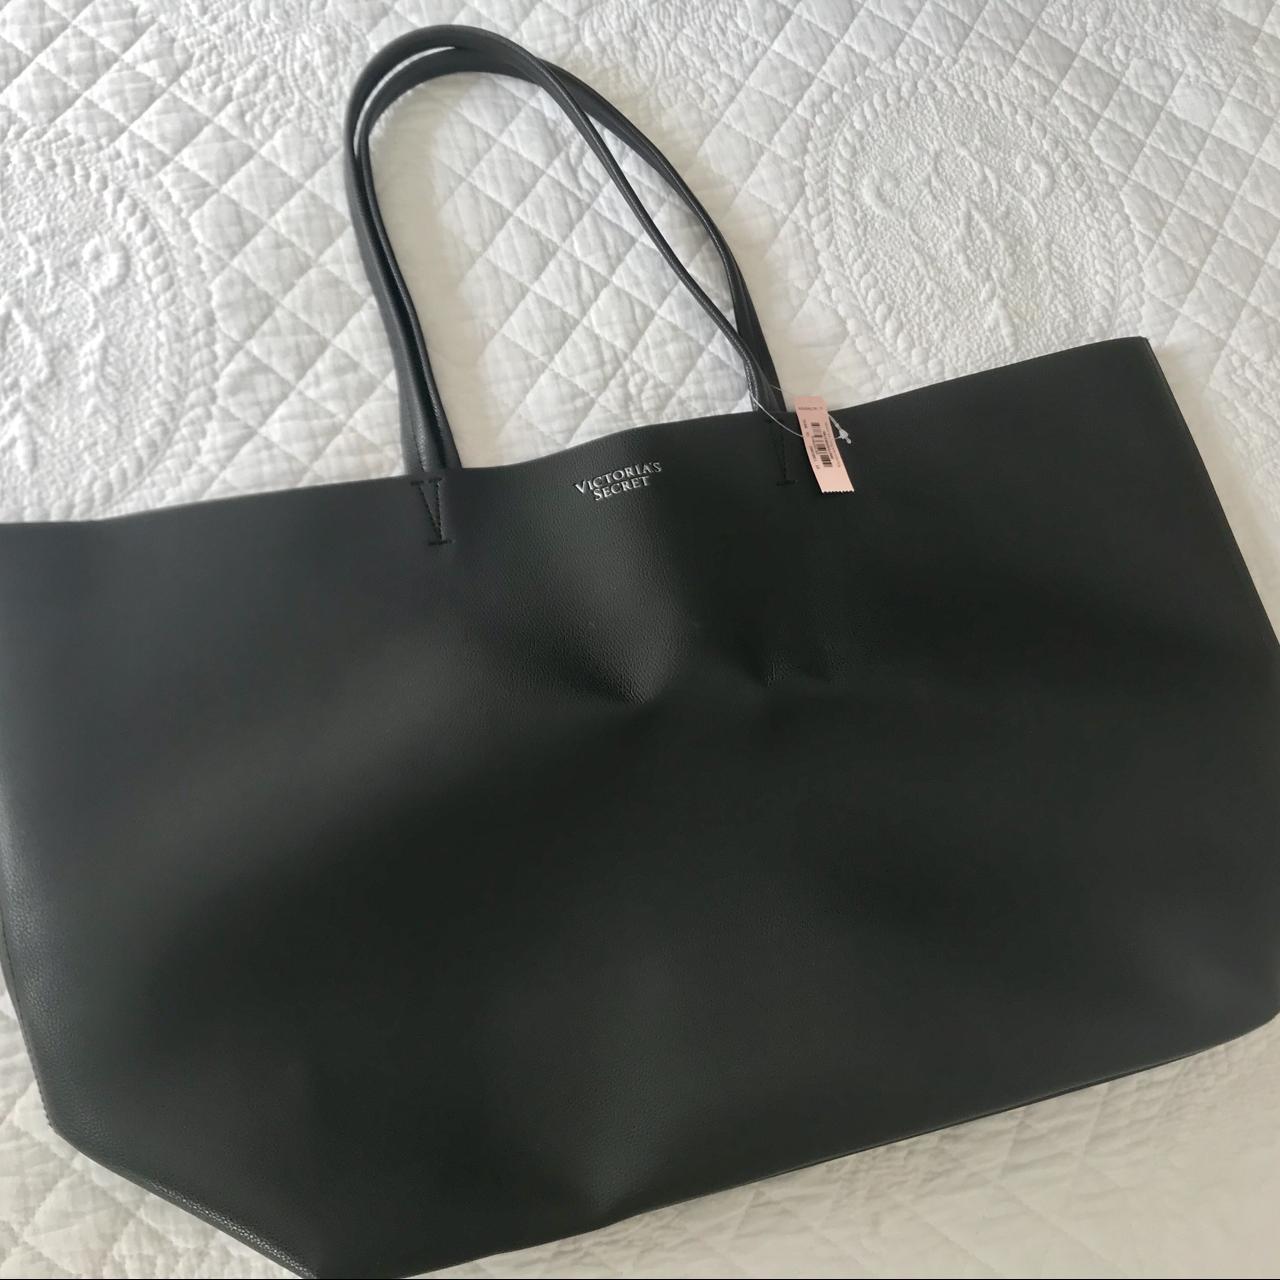 Victoria’s Secret large black tote bag., Leather